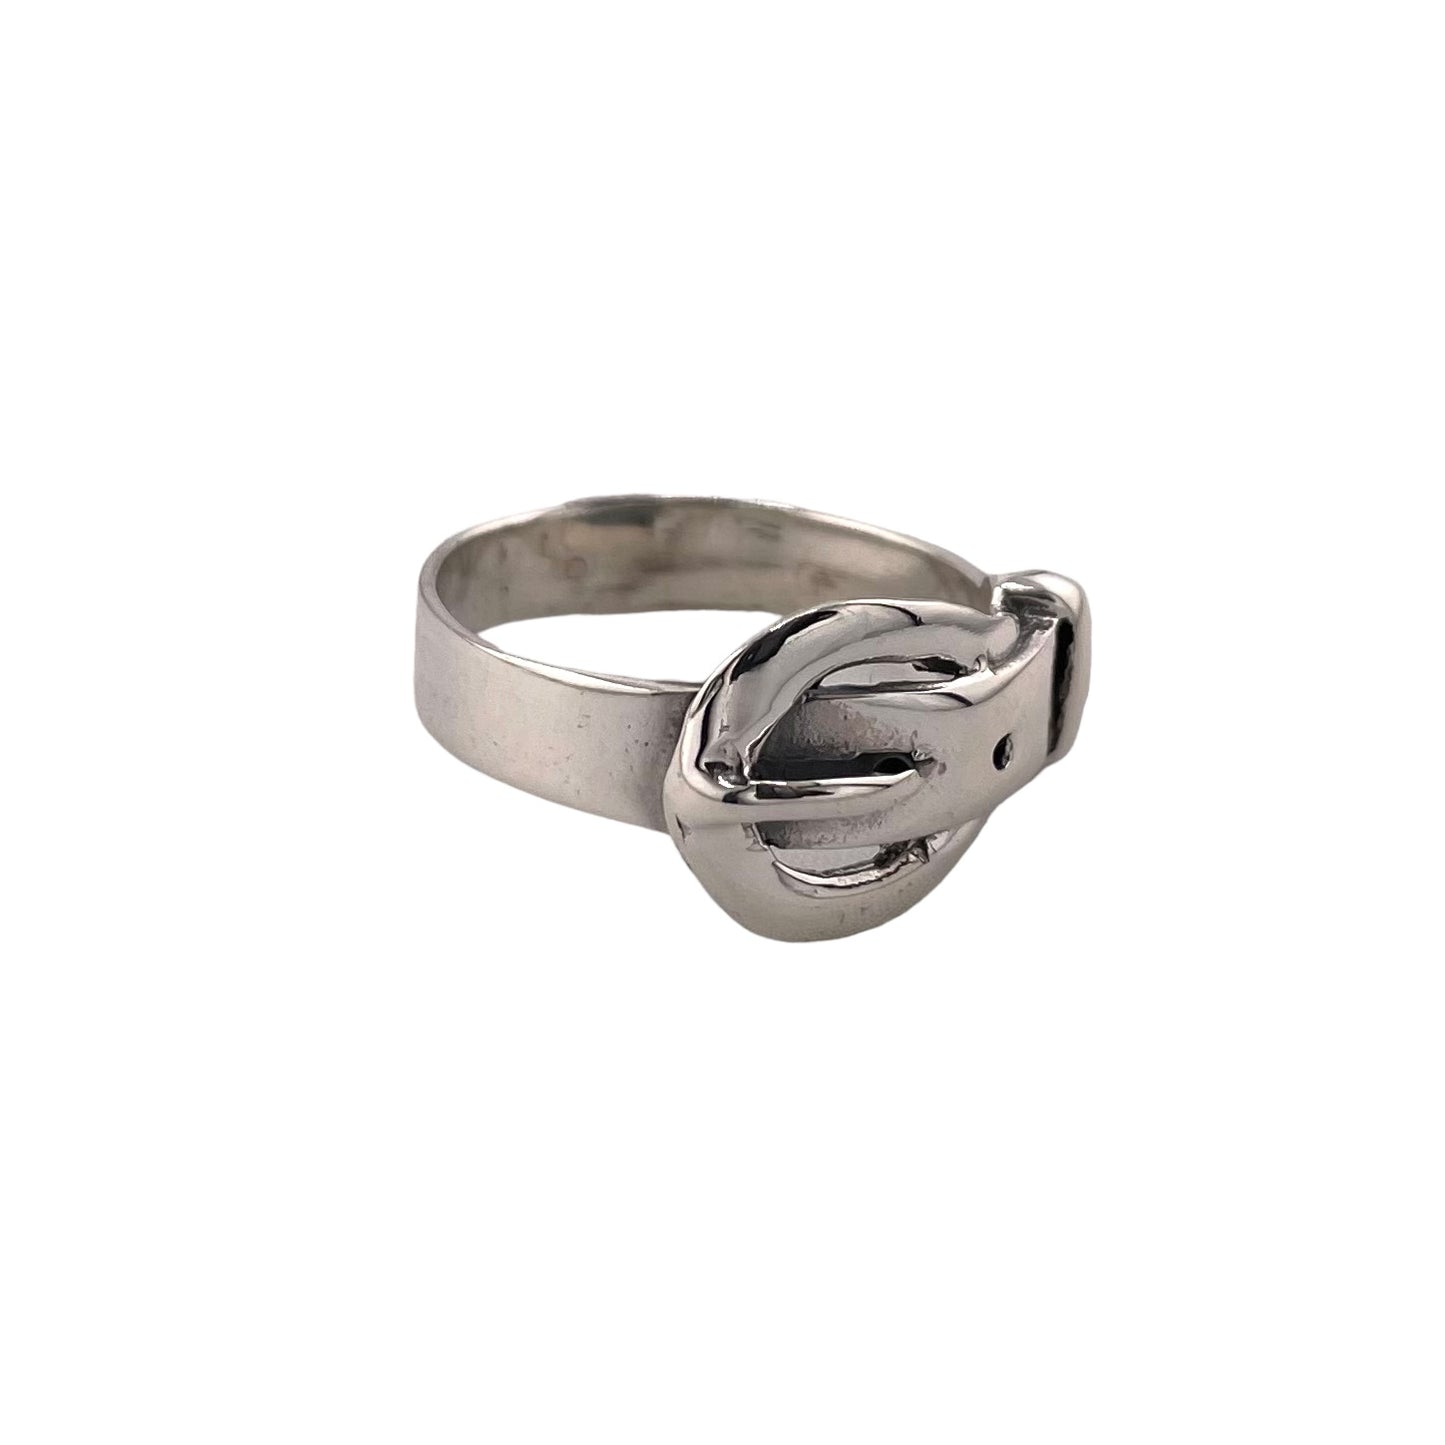 Belt Buckle Ring Sterling Silver